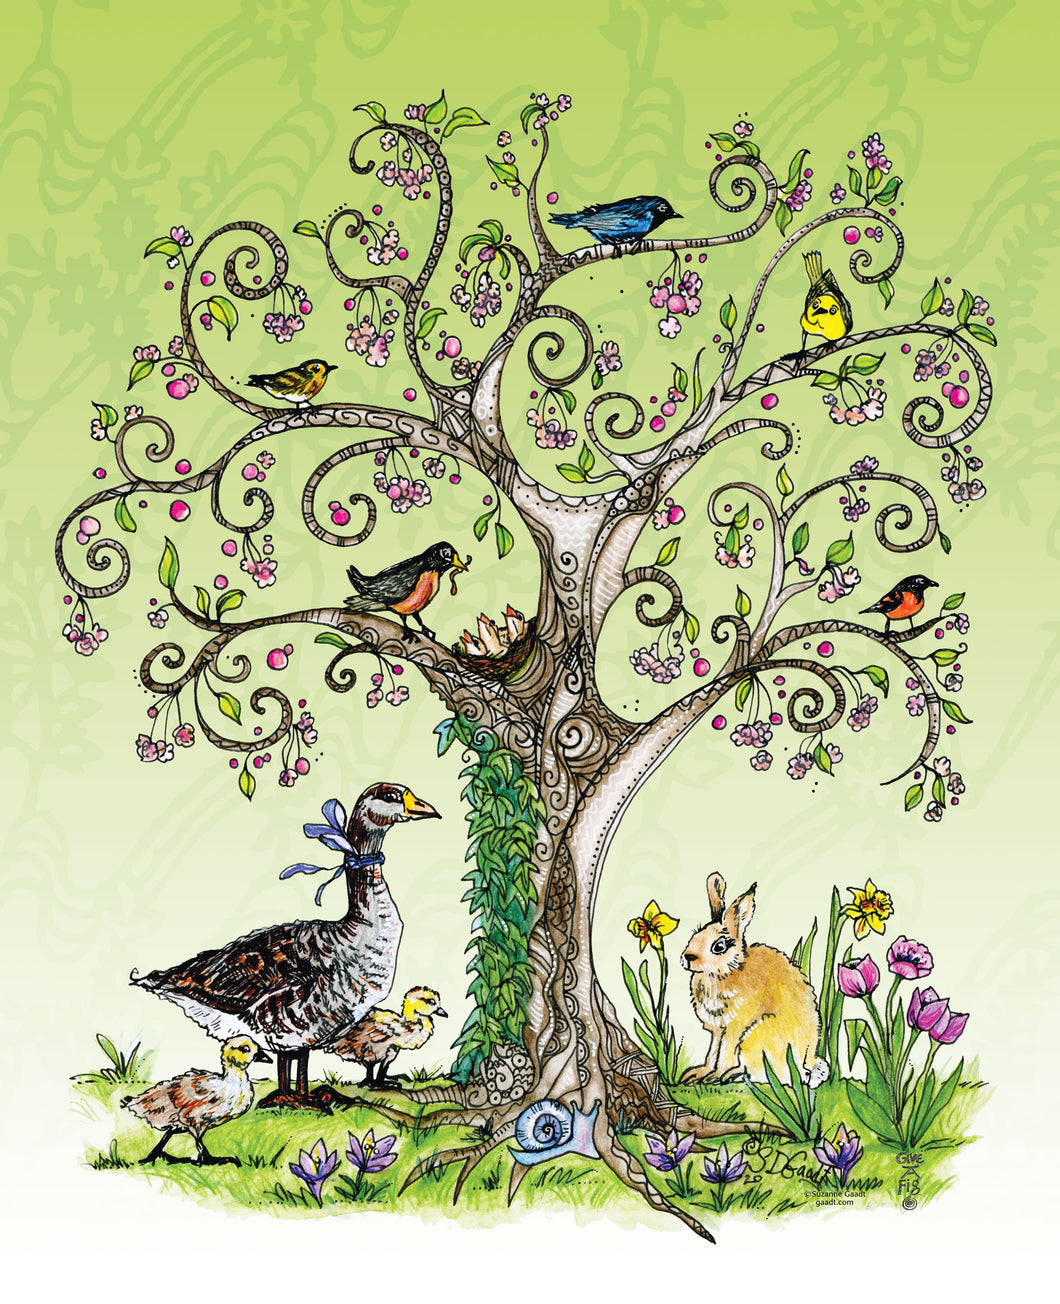 Tree of Life, Four Seasons Prints & Cards